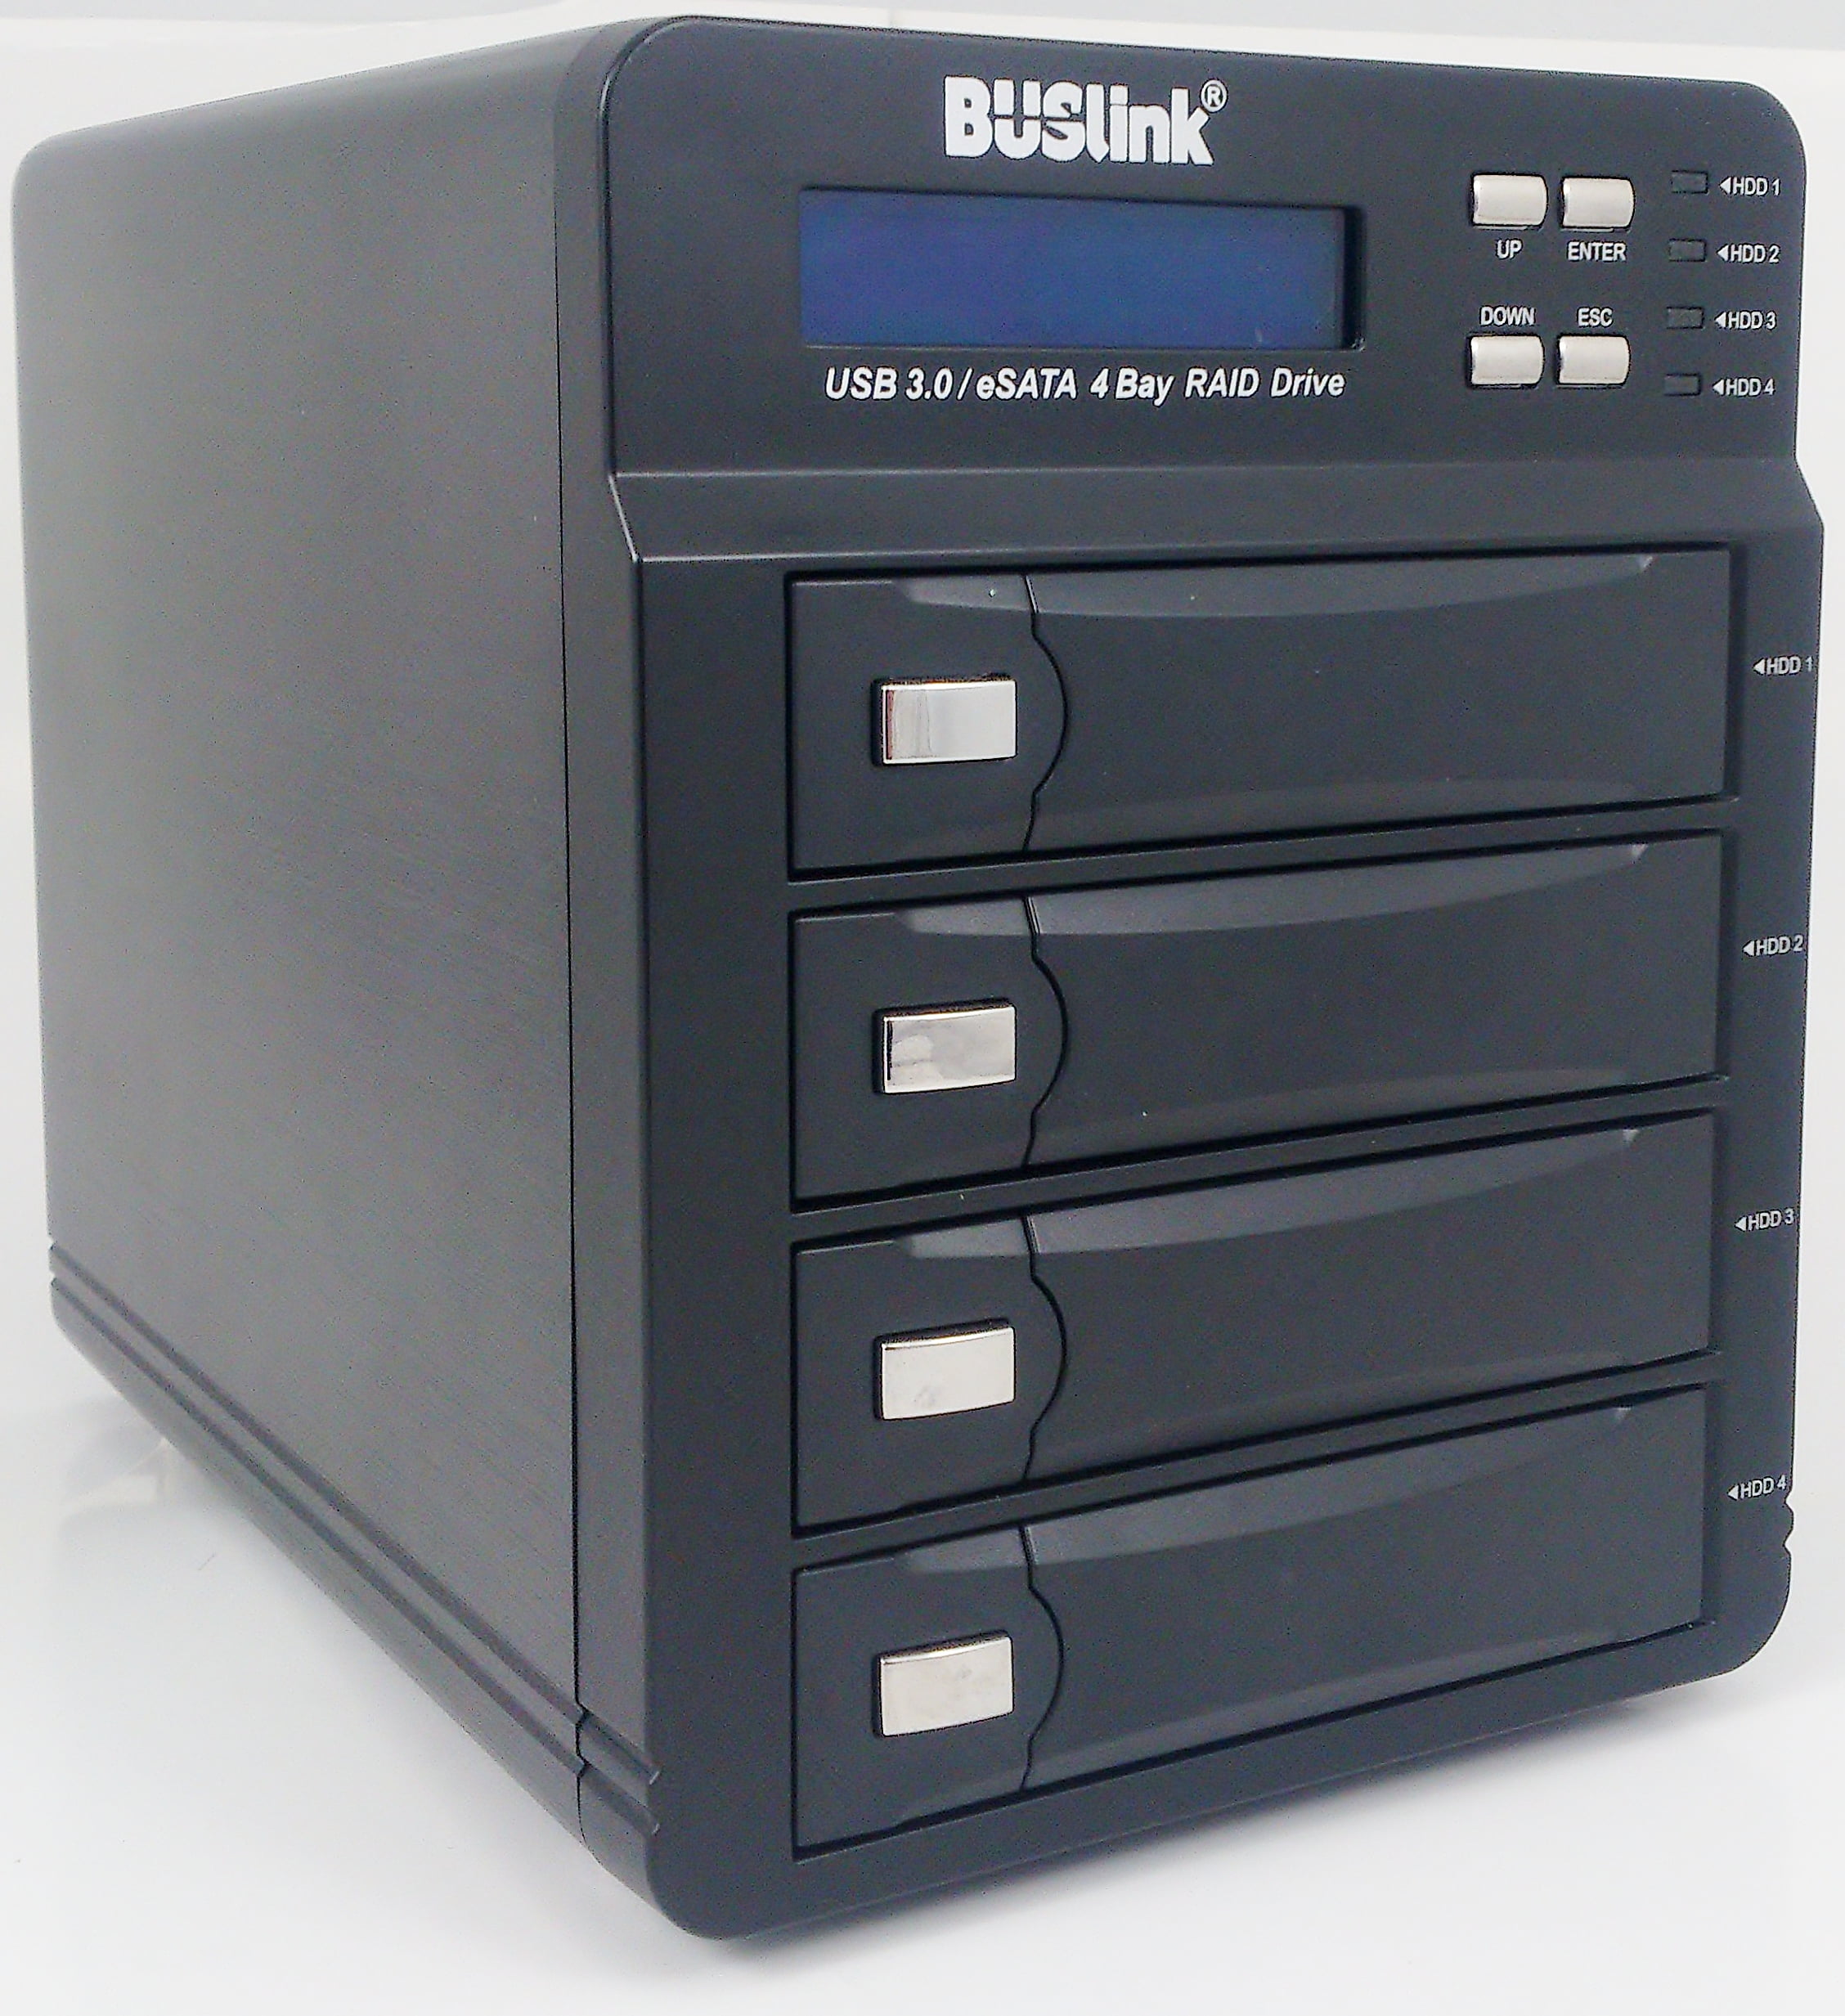 Buslink 16TB 4-bays RAID USB 3.0 / eSATA external desktop drive - Walmart.com